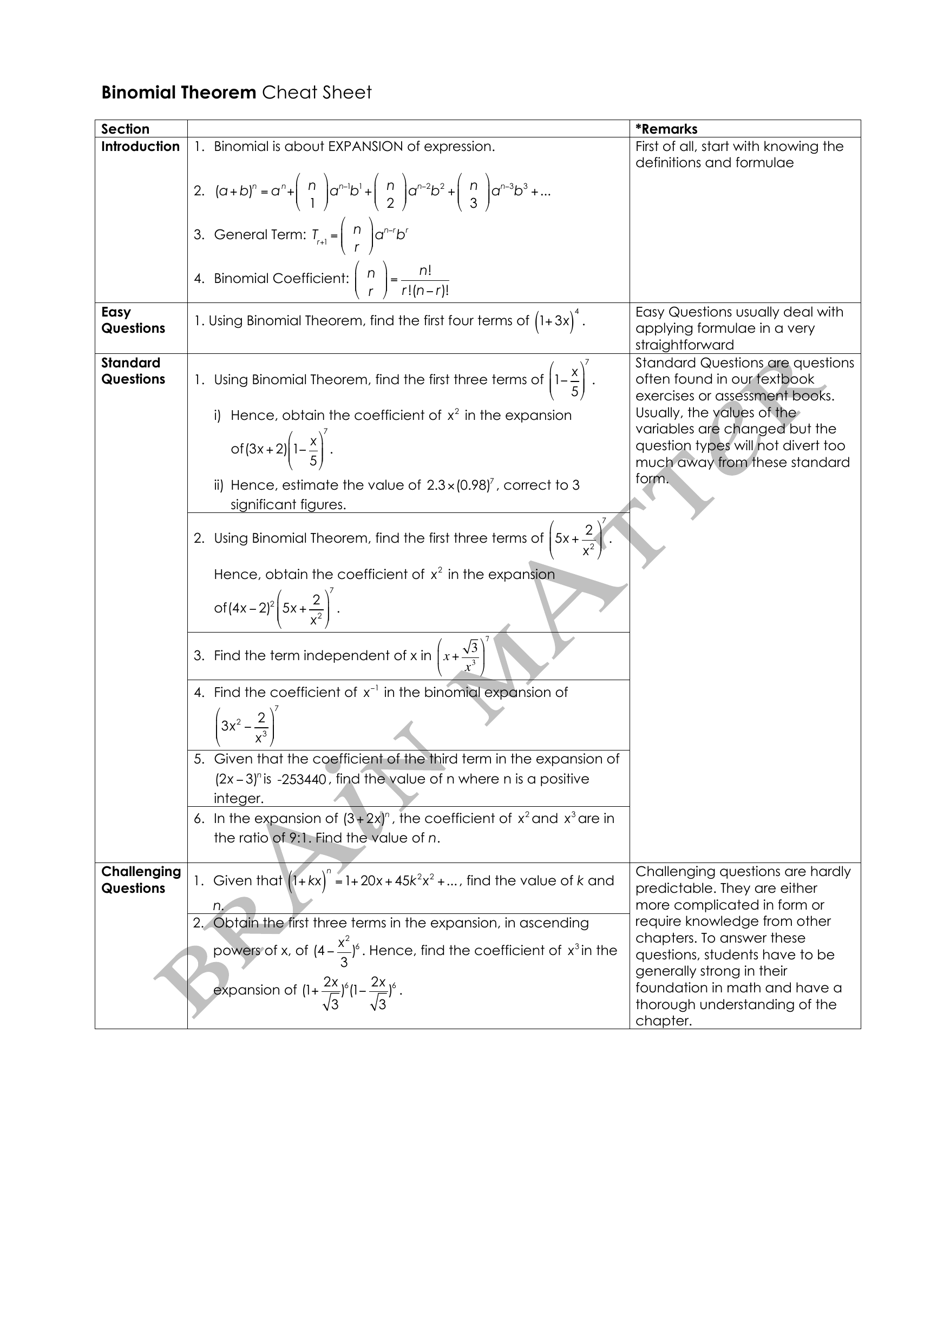 Binomial Theorem Cheat Sheet Image